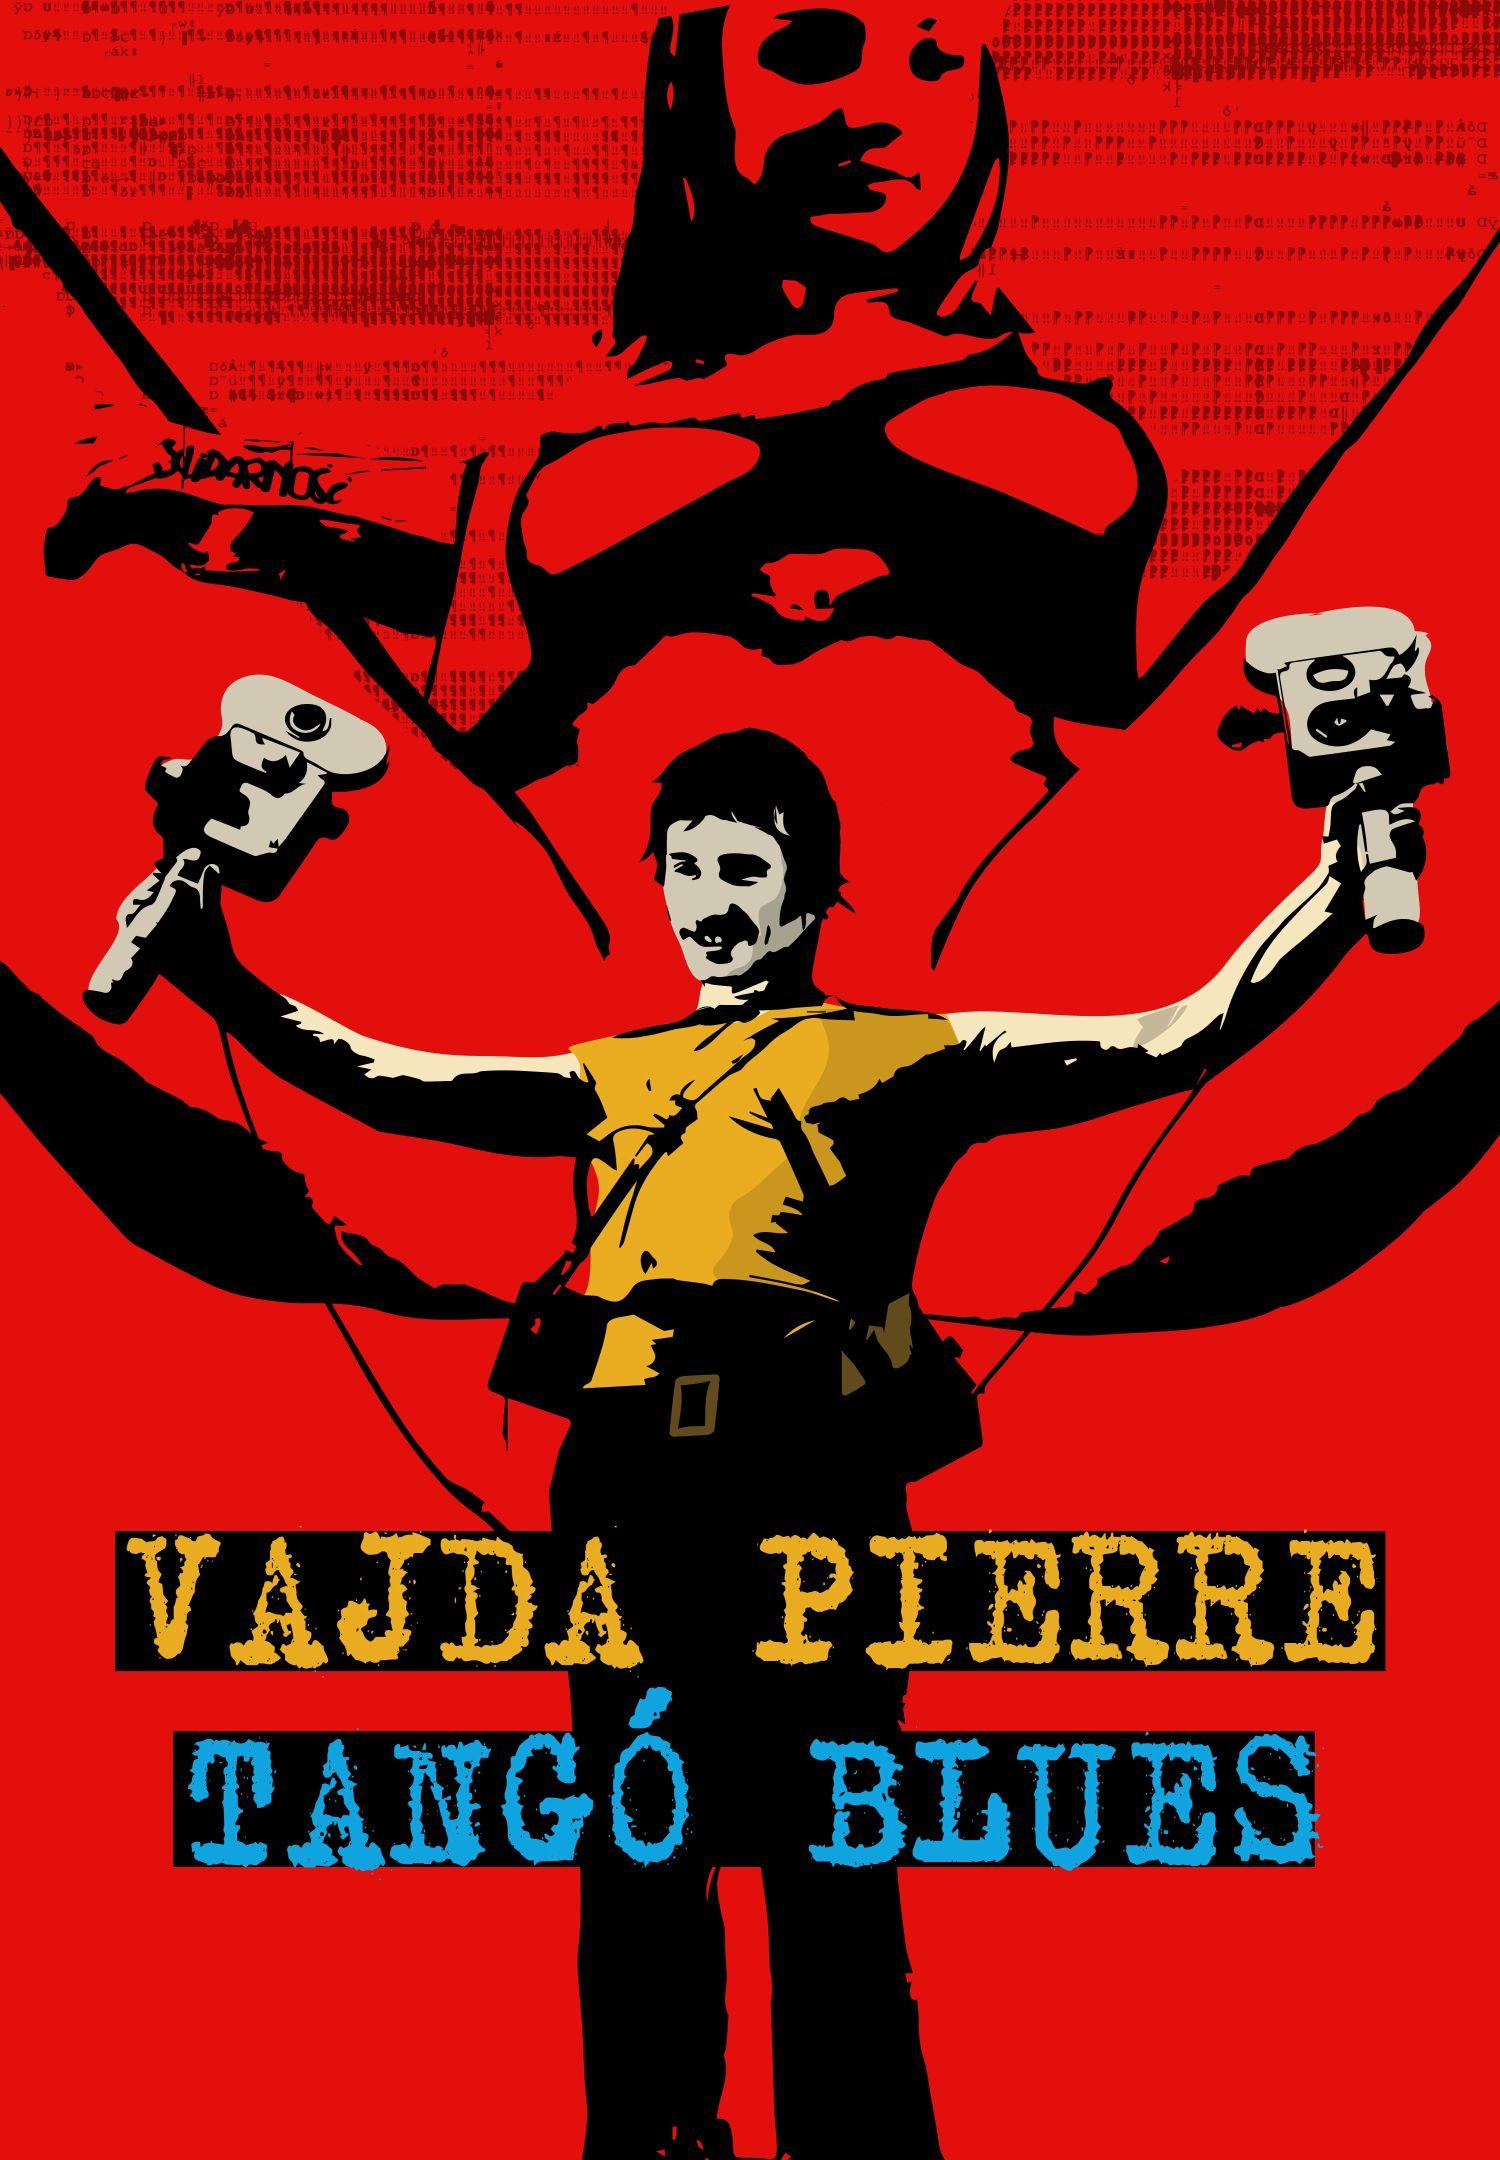 Vajda Pierre - Tangó blues [outlet]